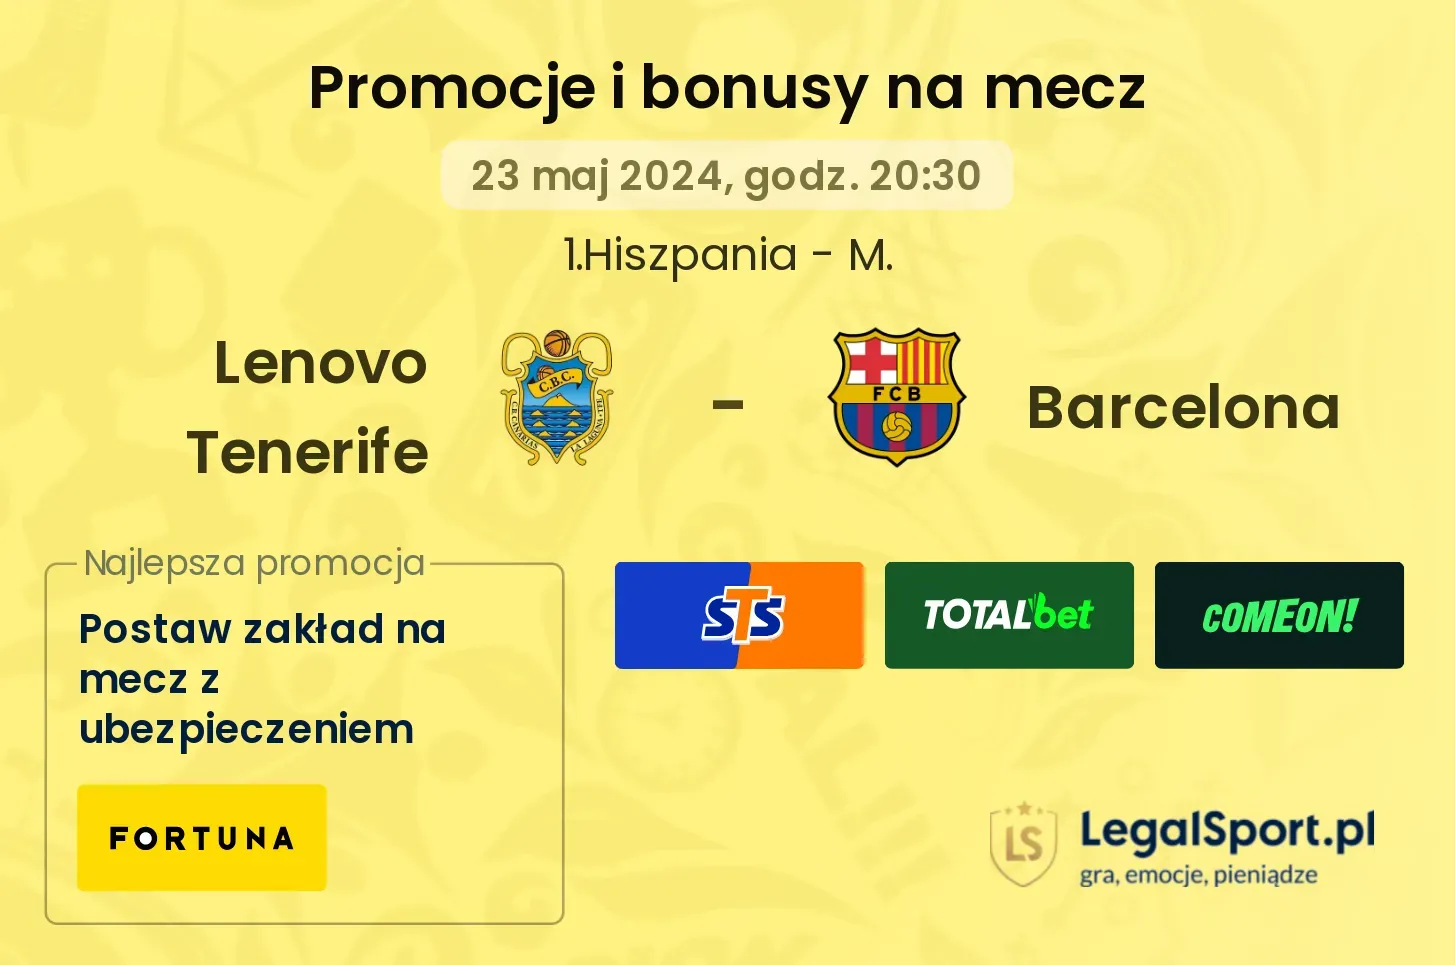 Lenovo Tenerife - Barcelona bonusy i promocje (23.05, 20:30)